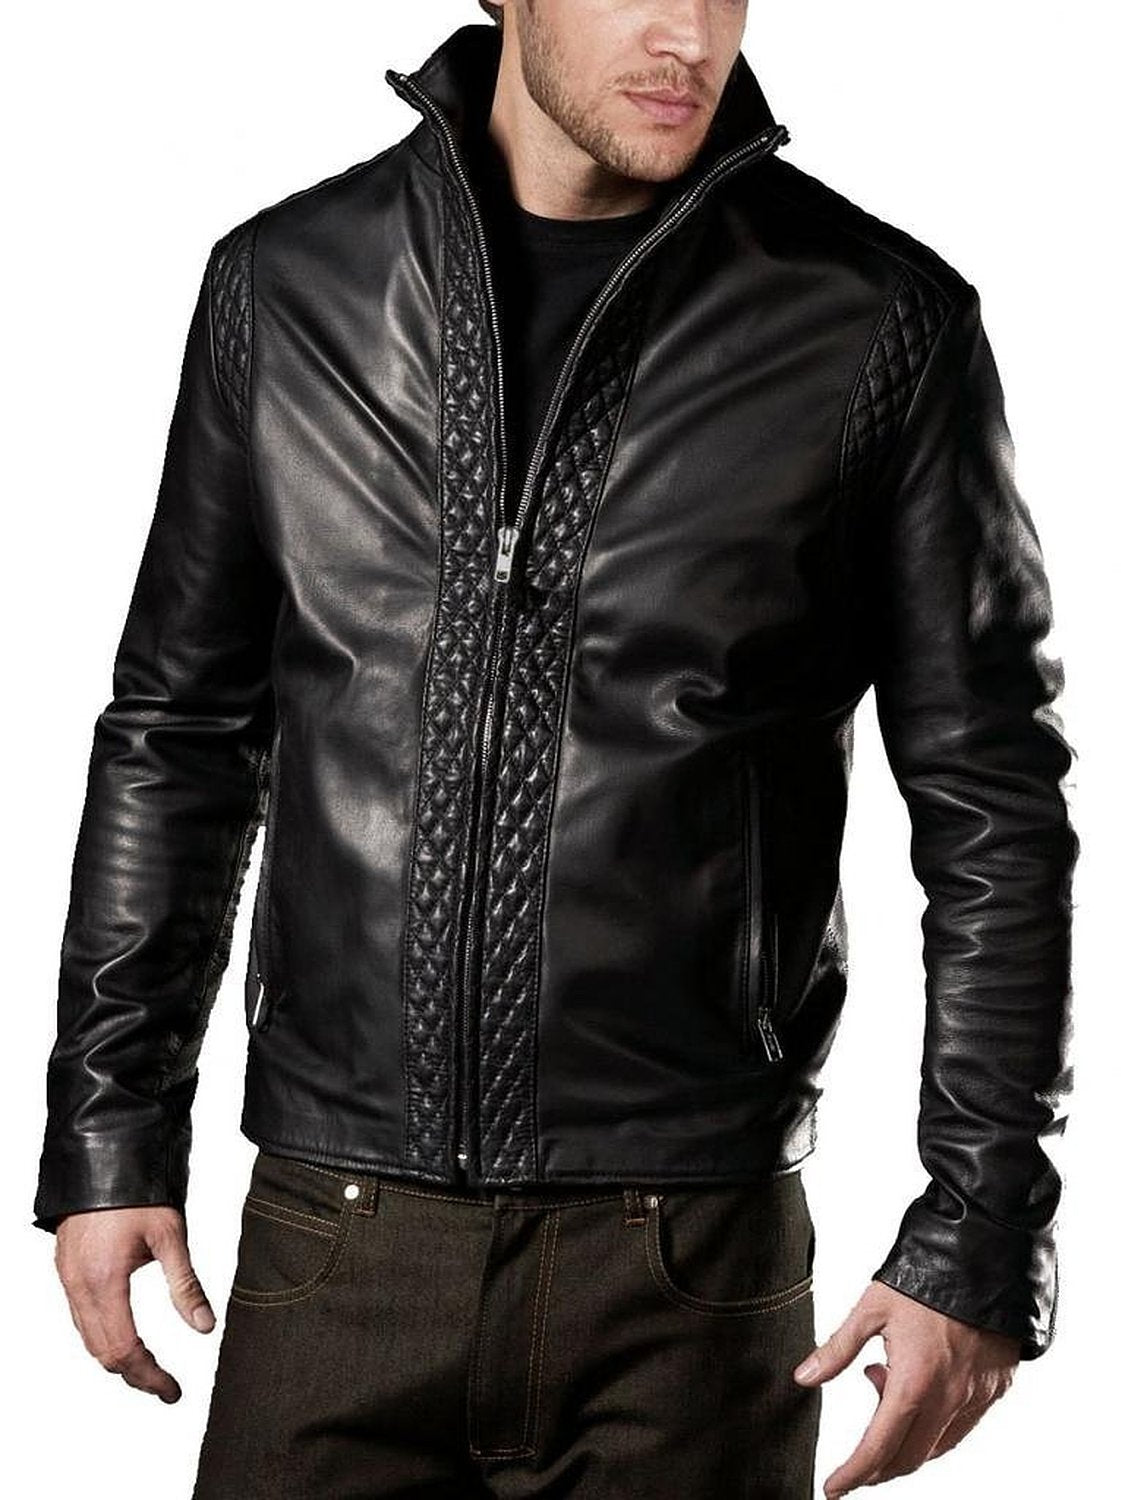 Leather Jackets Hub Mens Genuine Lambskin Leather Jacket (Black, Fencing Jacket) - 1501071